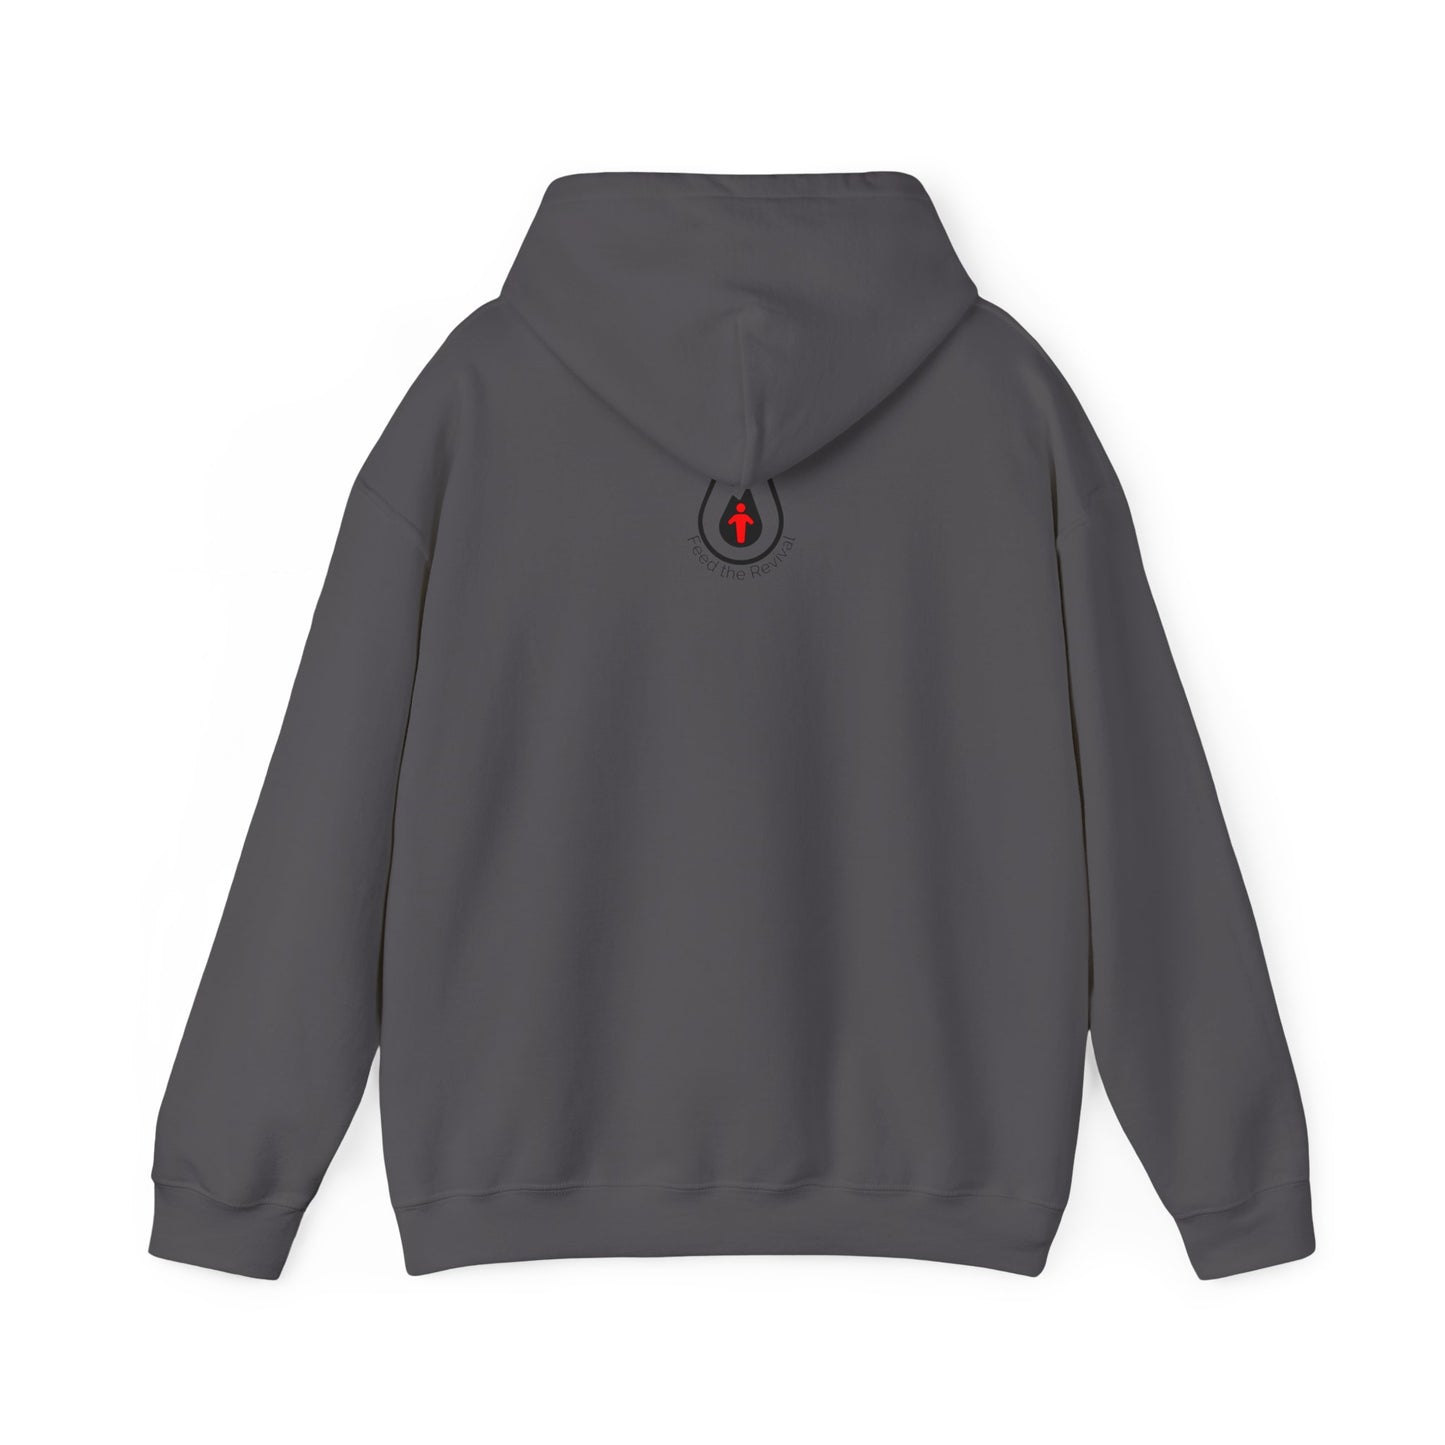 Be Present - Unisex Heavy Blend™ Hooded Sweatshirt